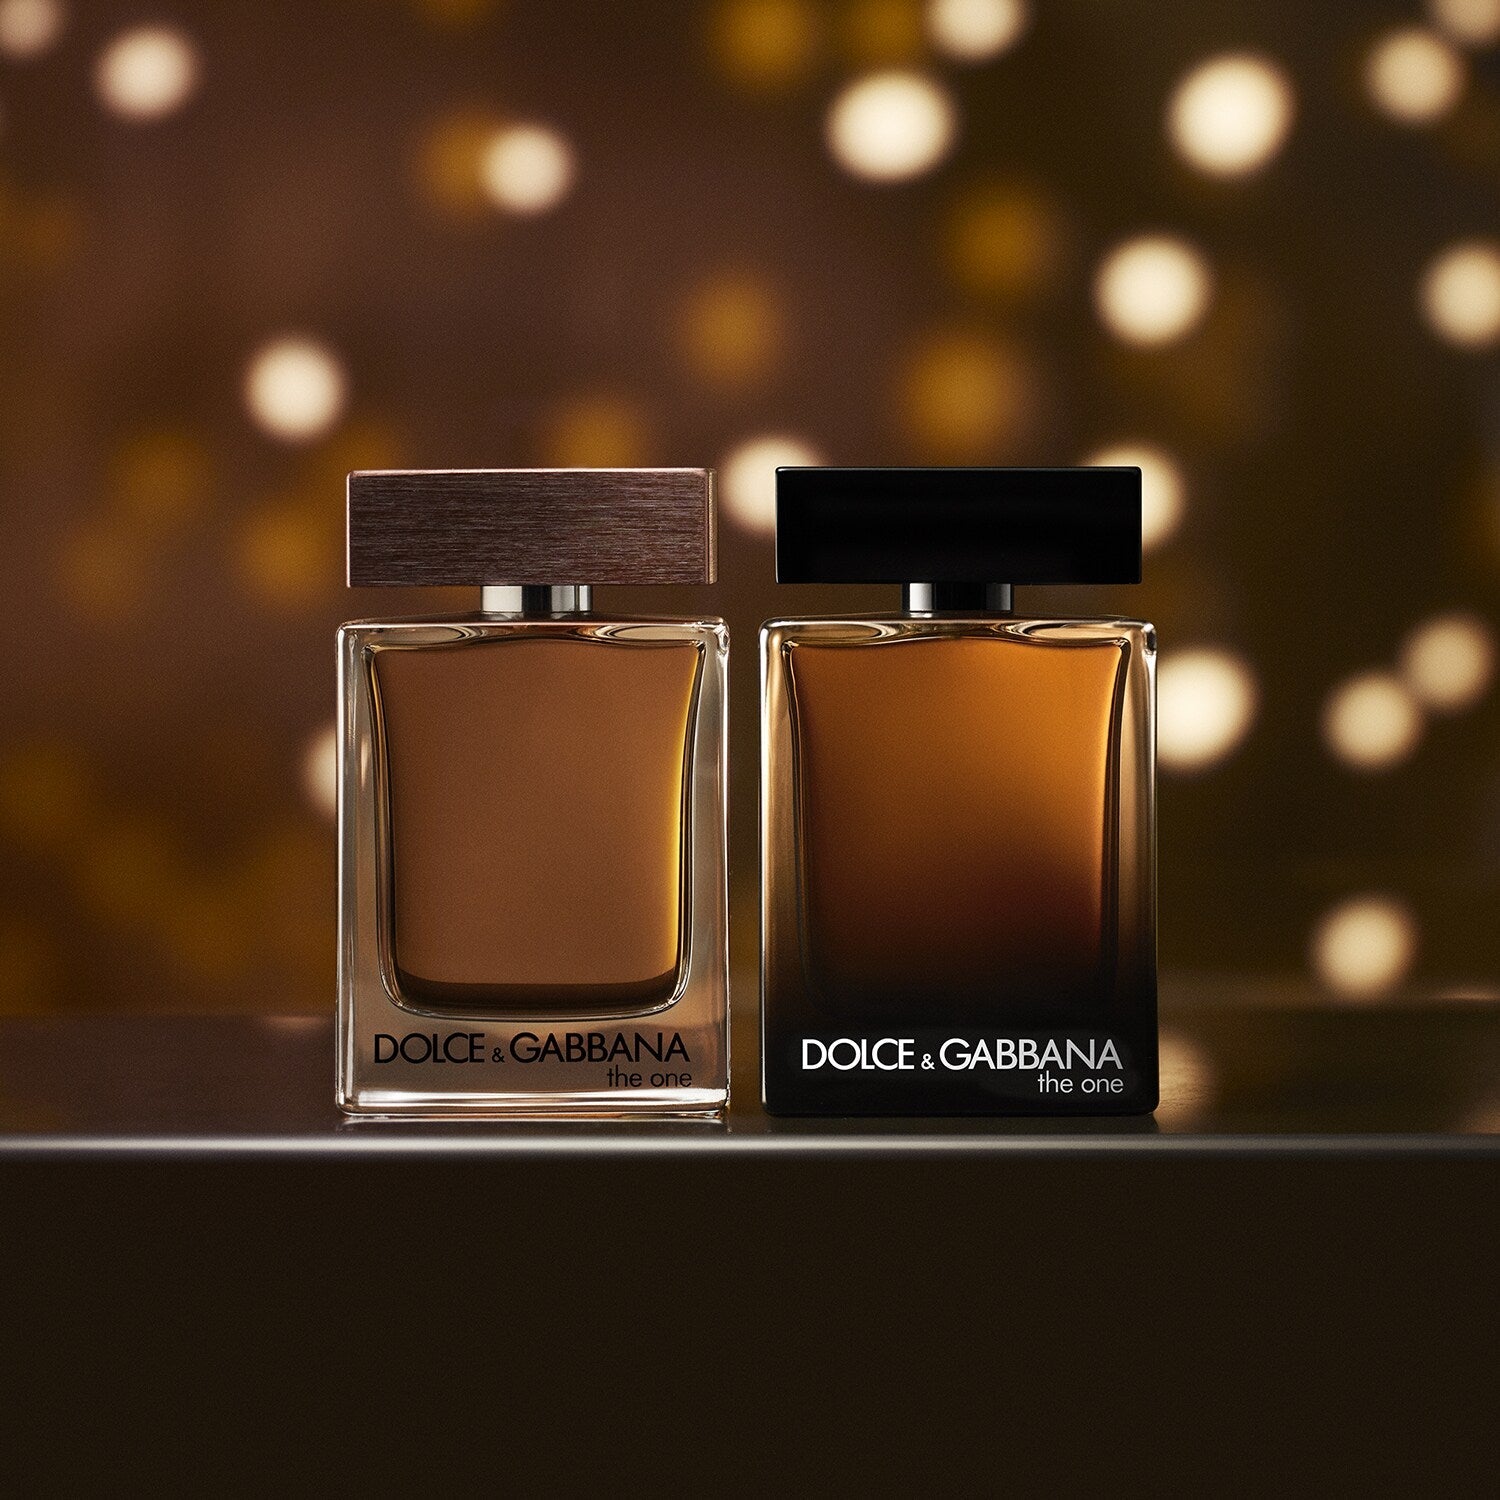 Dolce & Gabbana The One EDT For Men | My Perfume Shop Australia